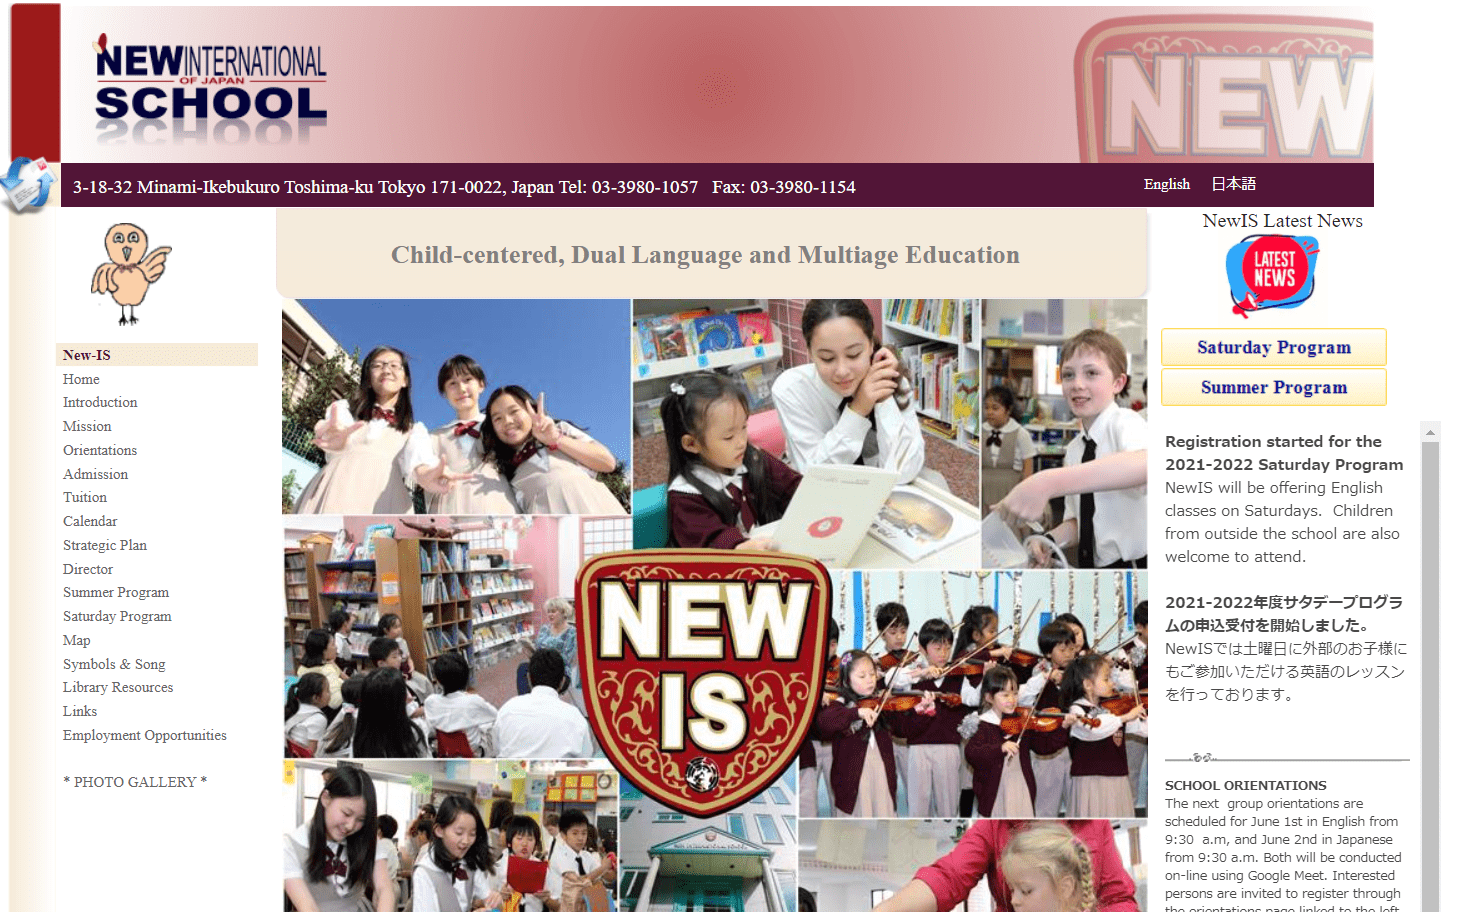 New International School of Japan